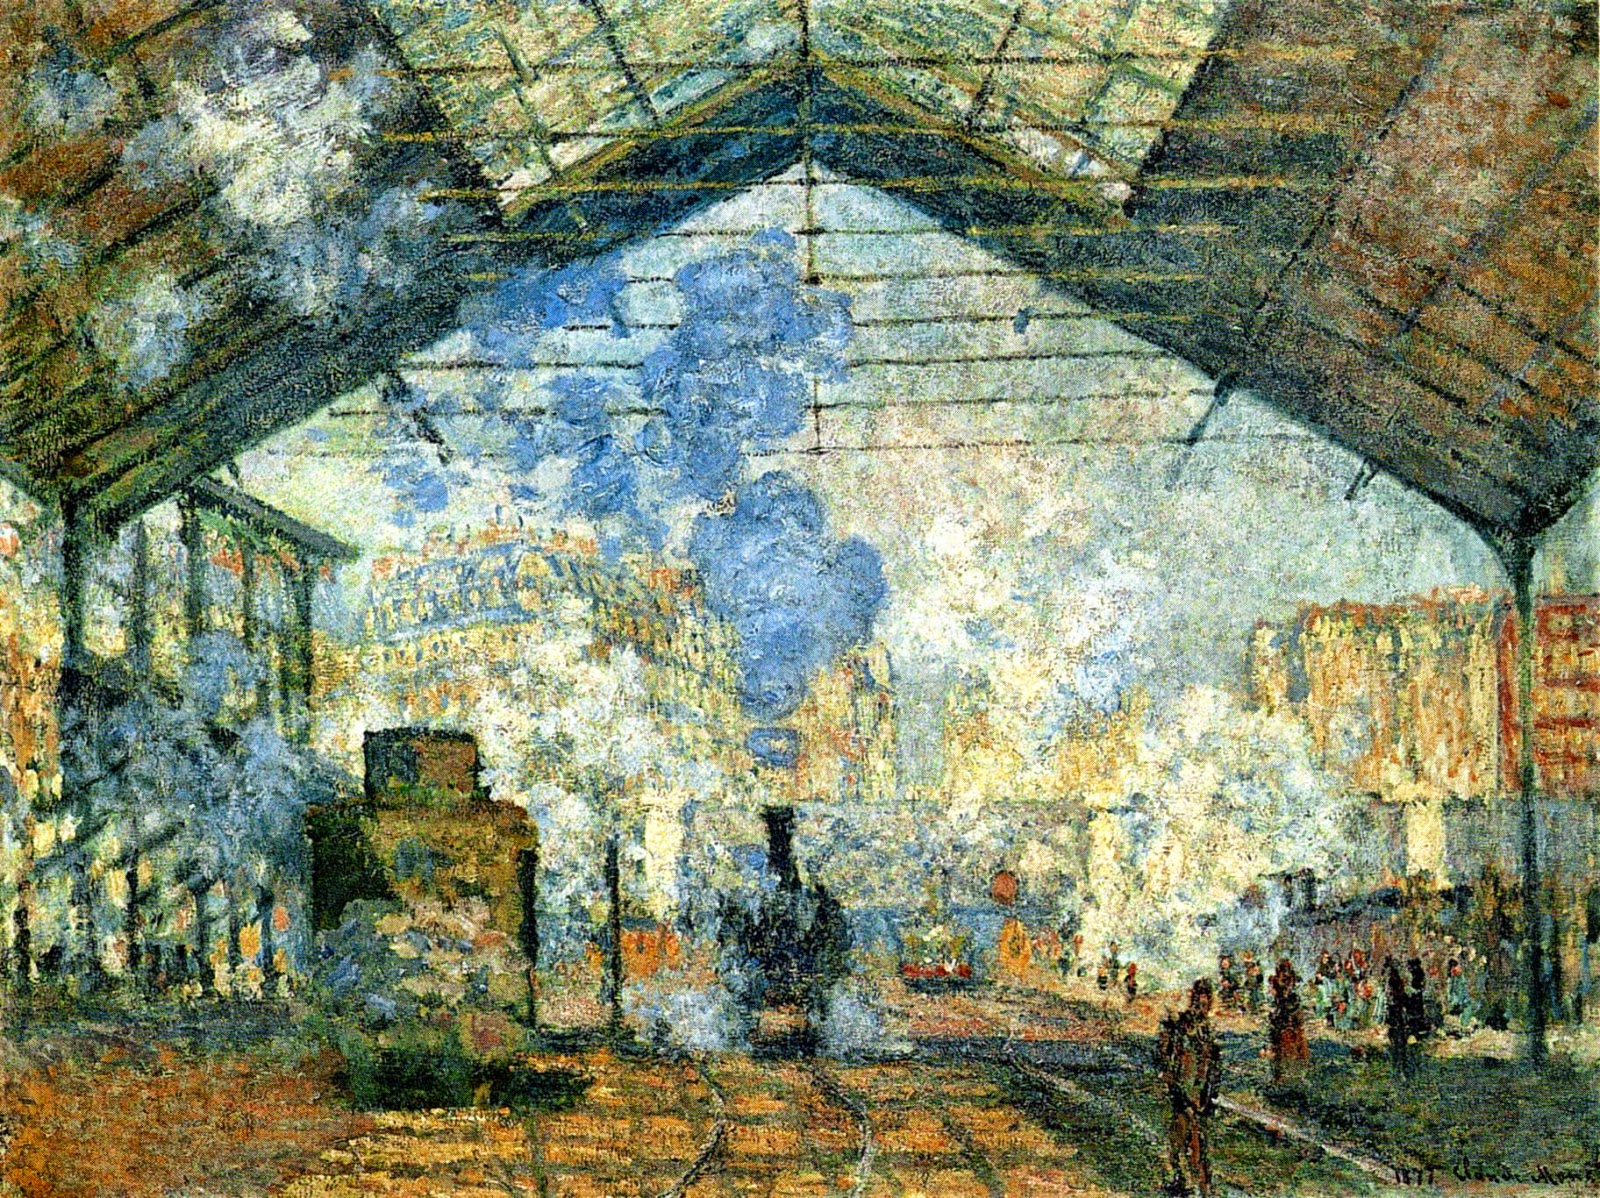 Claude+Monet-1840-1926 (350).jpg